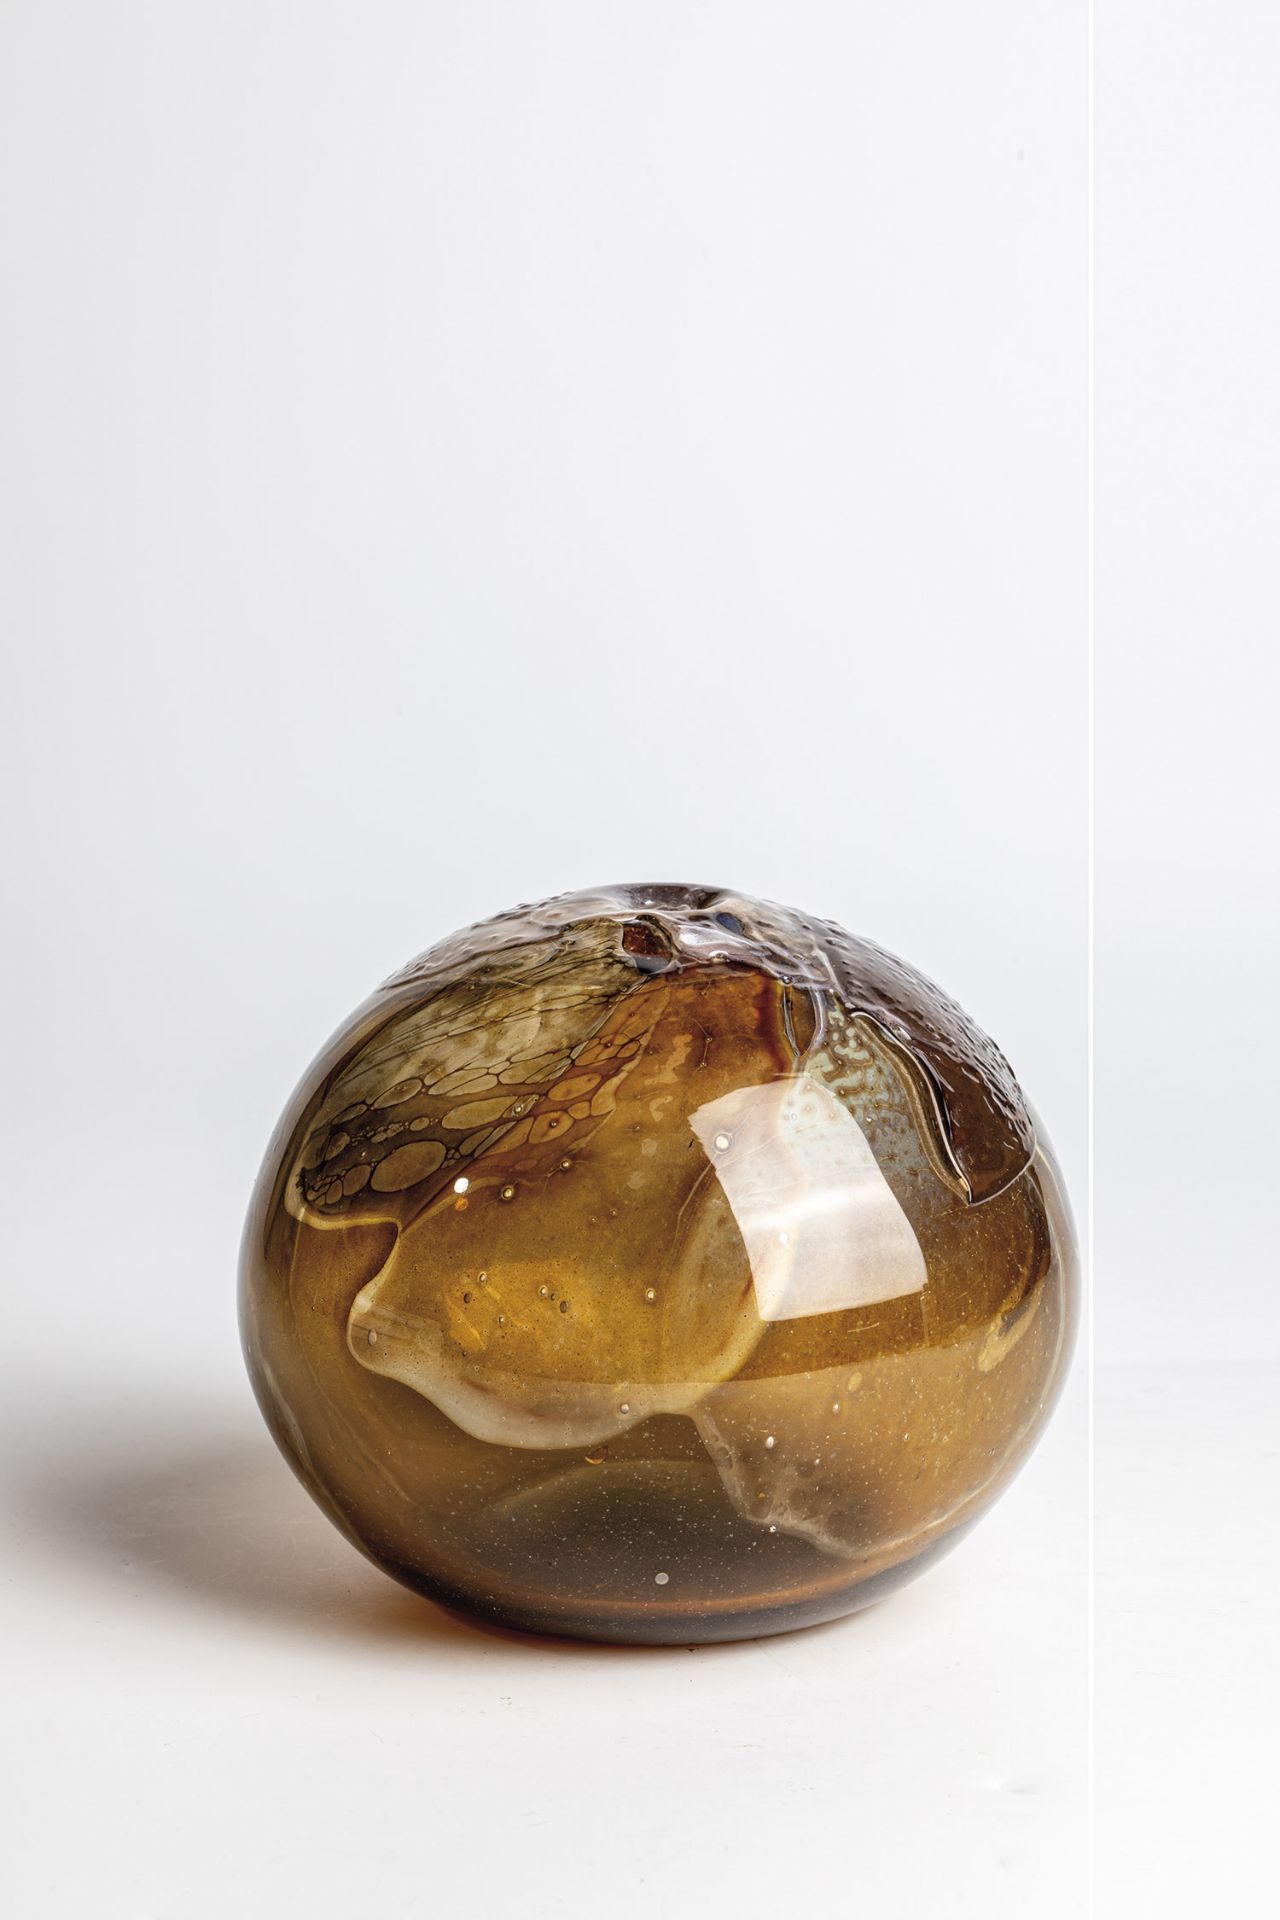 Ball vase Ingrid Danhauser, 1985 Amber glass, coloured Kroesel embossing and melting. Inscribed